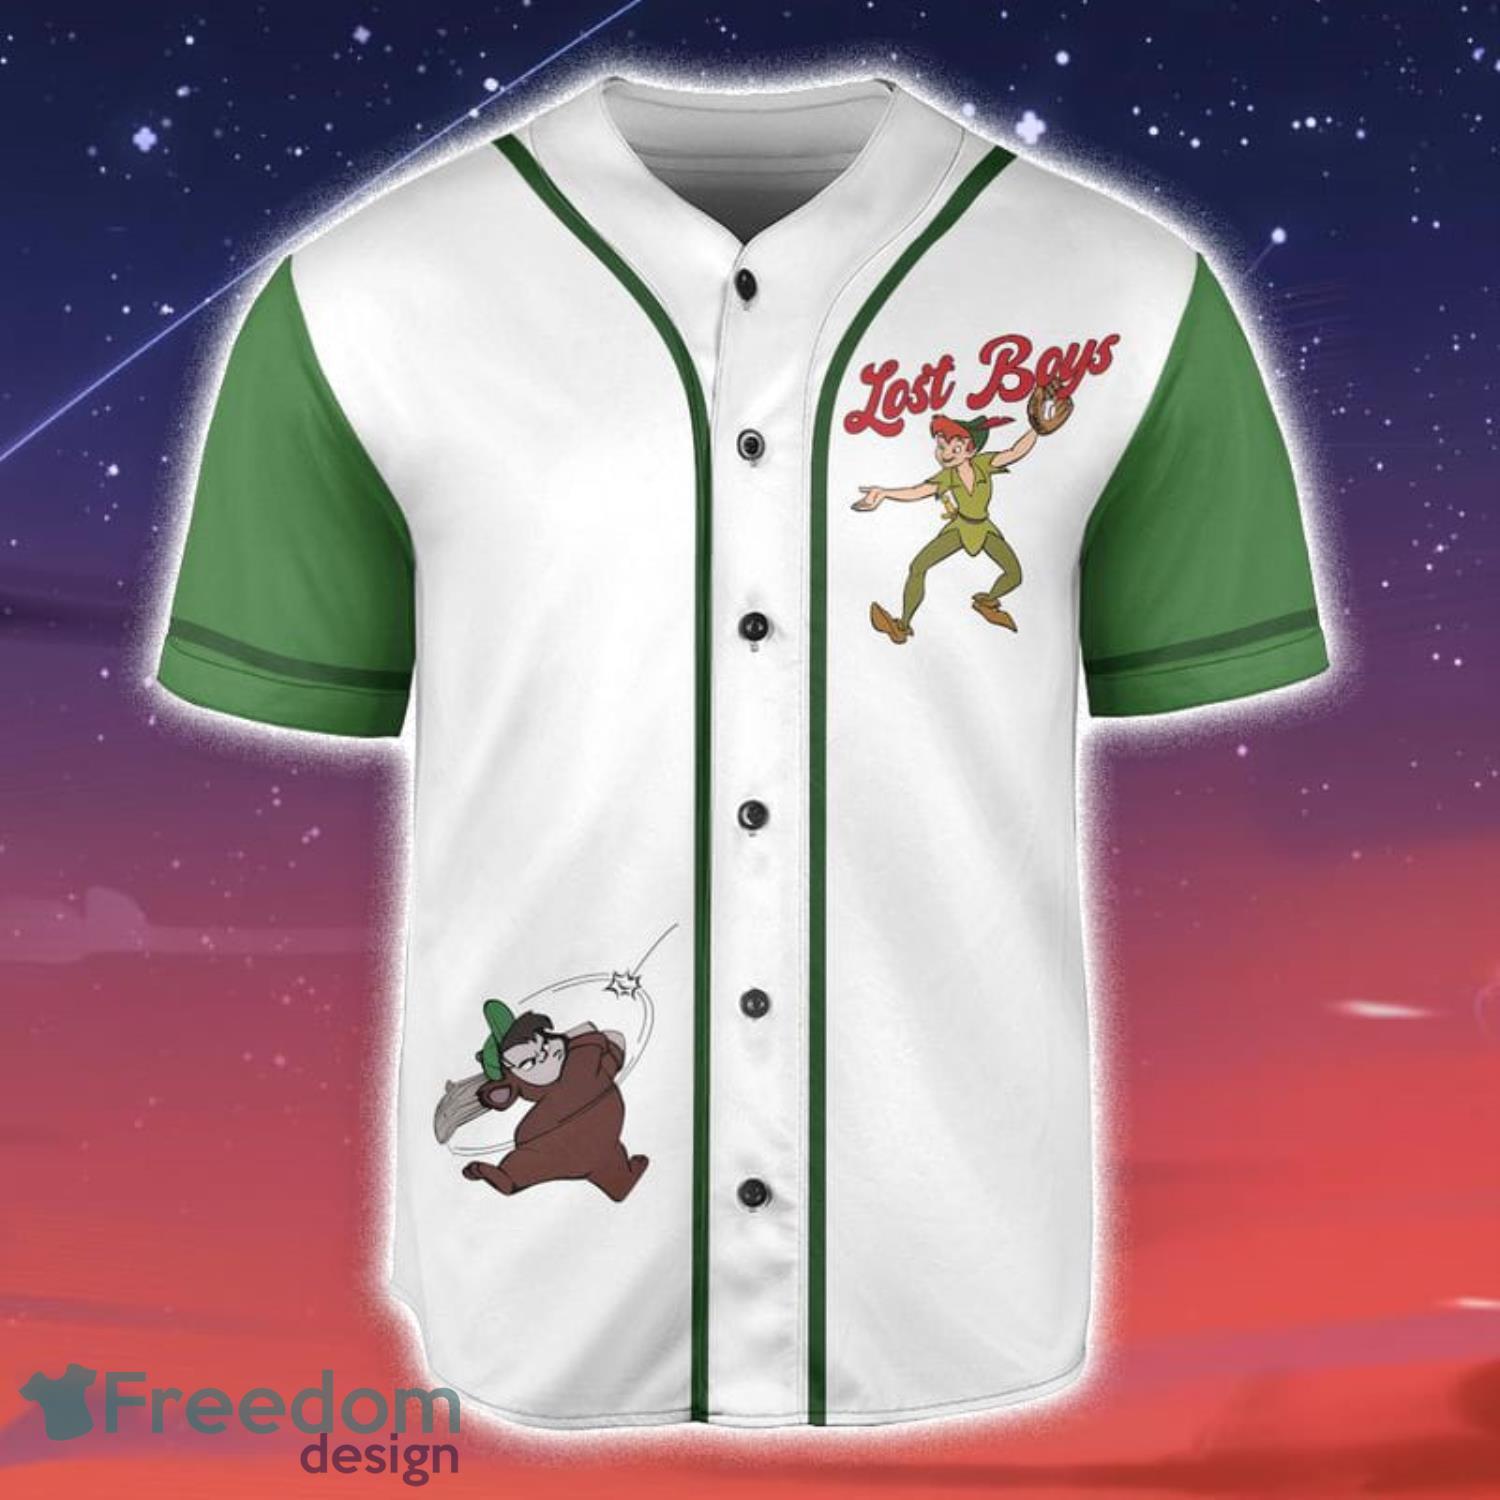 Peter Pan Lost Boys All Over Print Baseball Jersey Shirt Summer